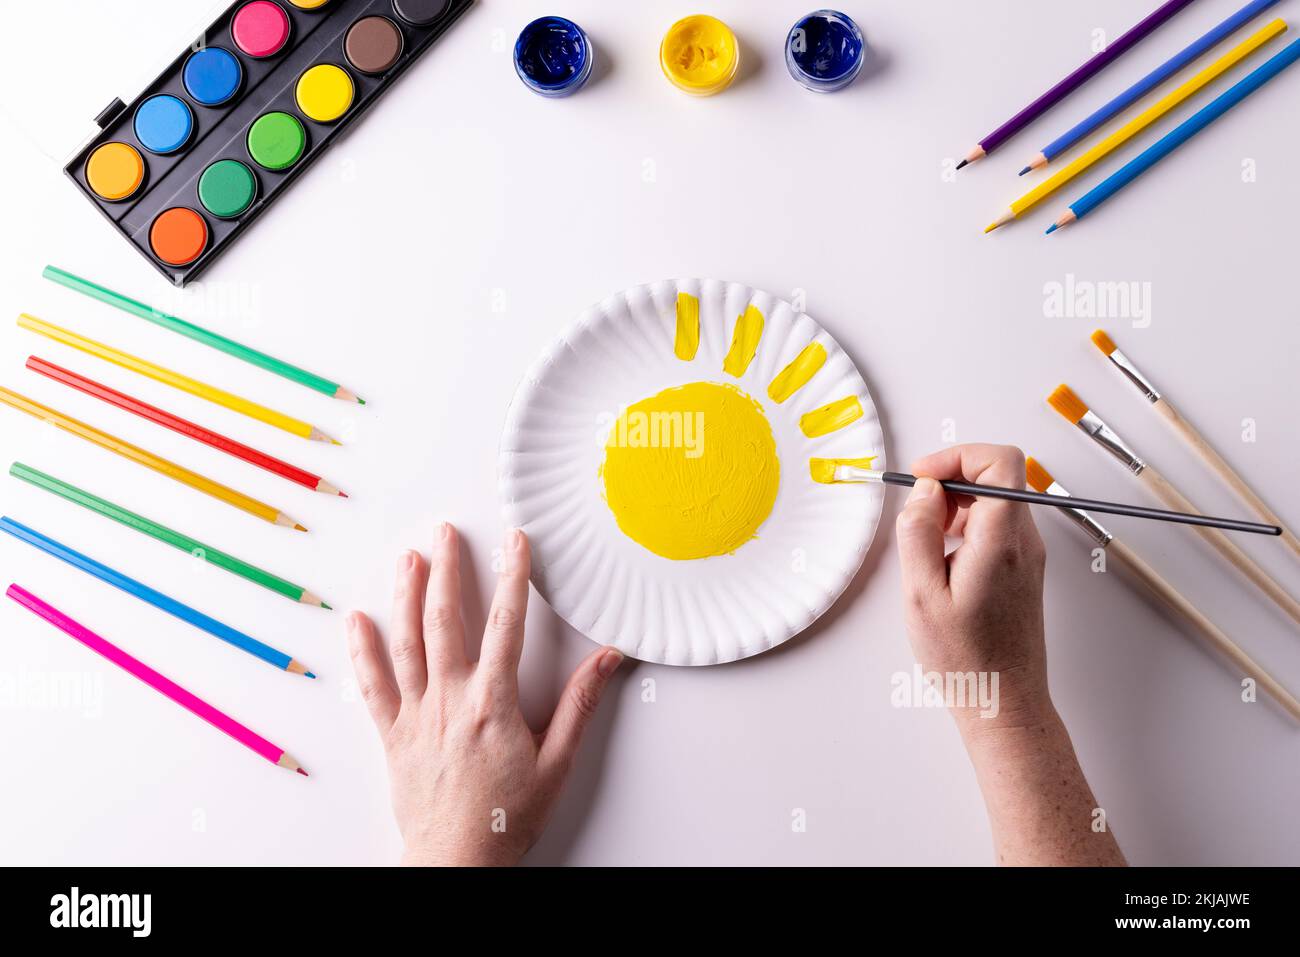 https://c8.alamy.com/comp/2KJAJWE/overhead-of-hands-painting-with-yellow-paint-on-paper-plate-with-art-materials-on-table-top-2KJAJWE.jpg